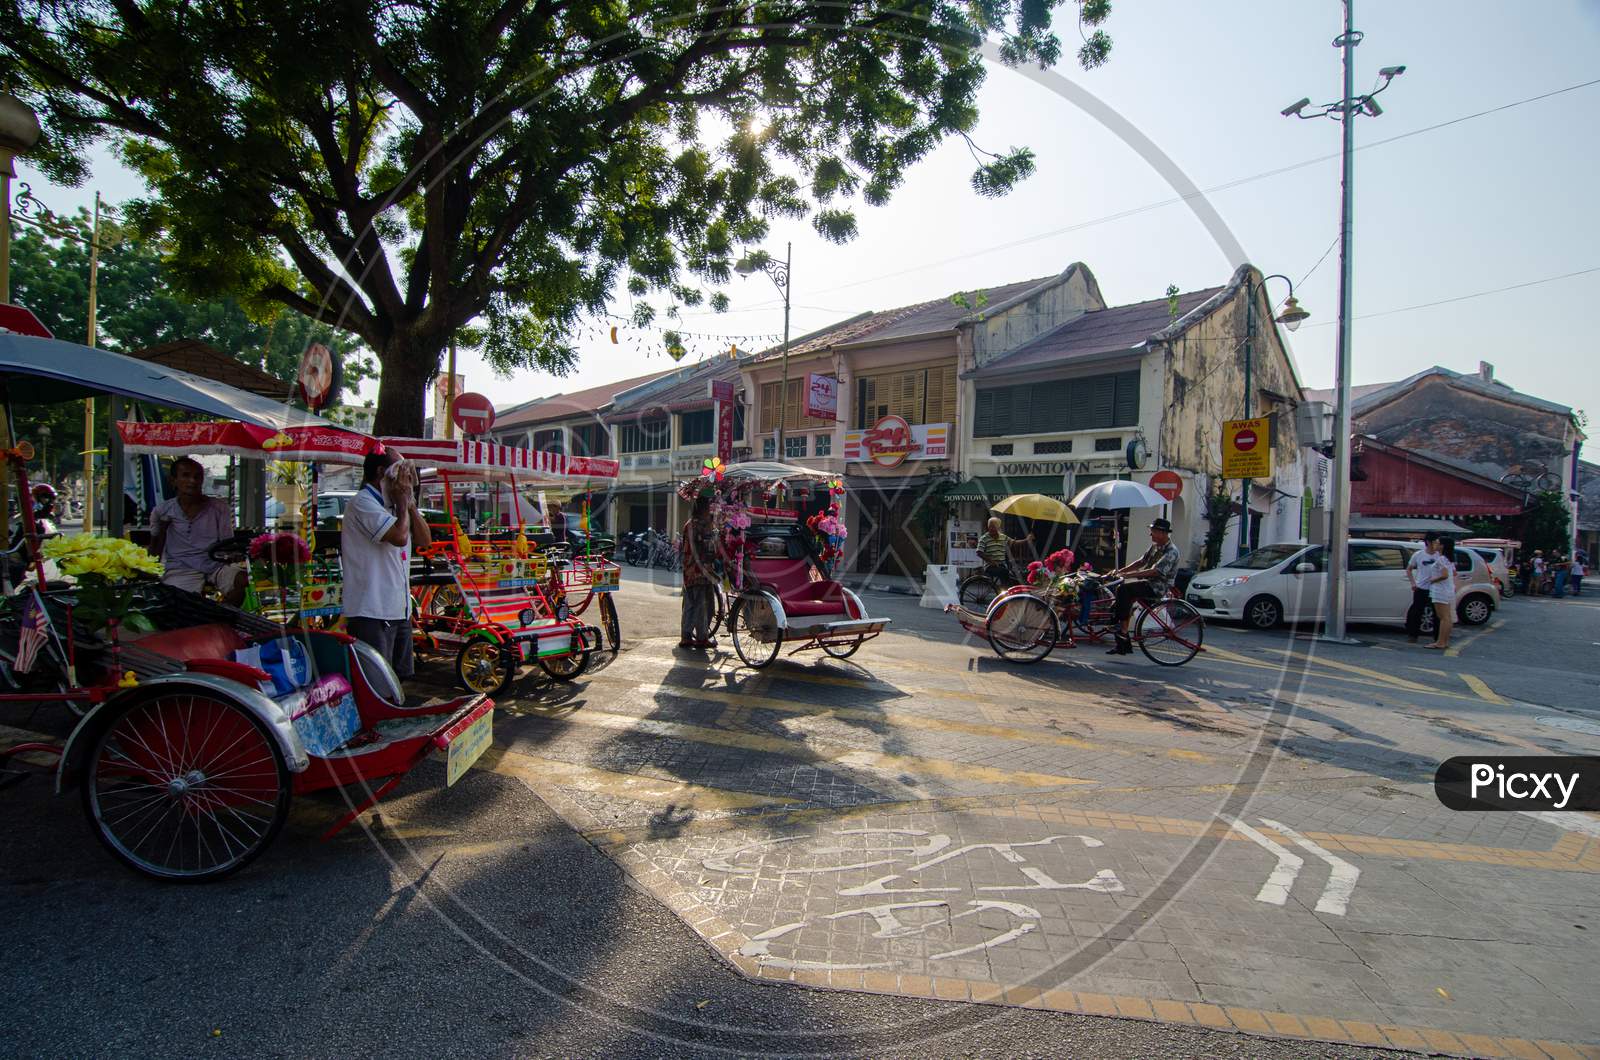 Rickshaw Driver At The Bicycle Friendly Street